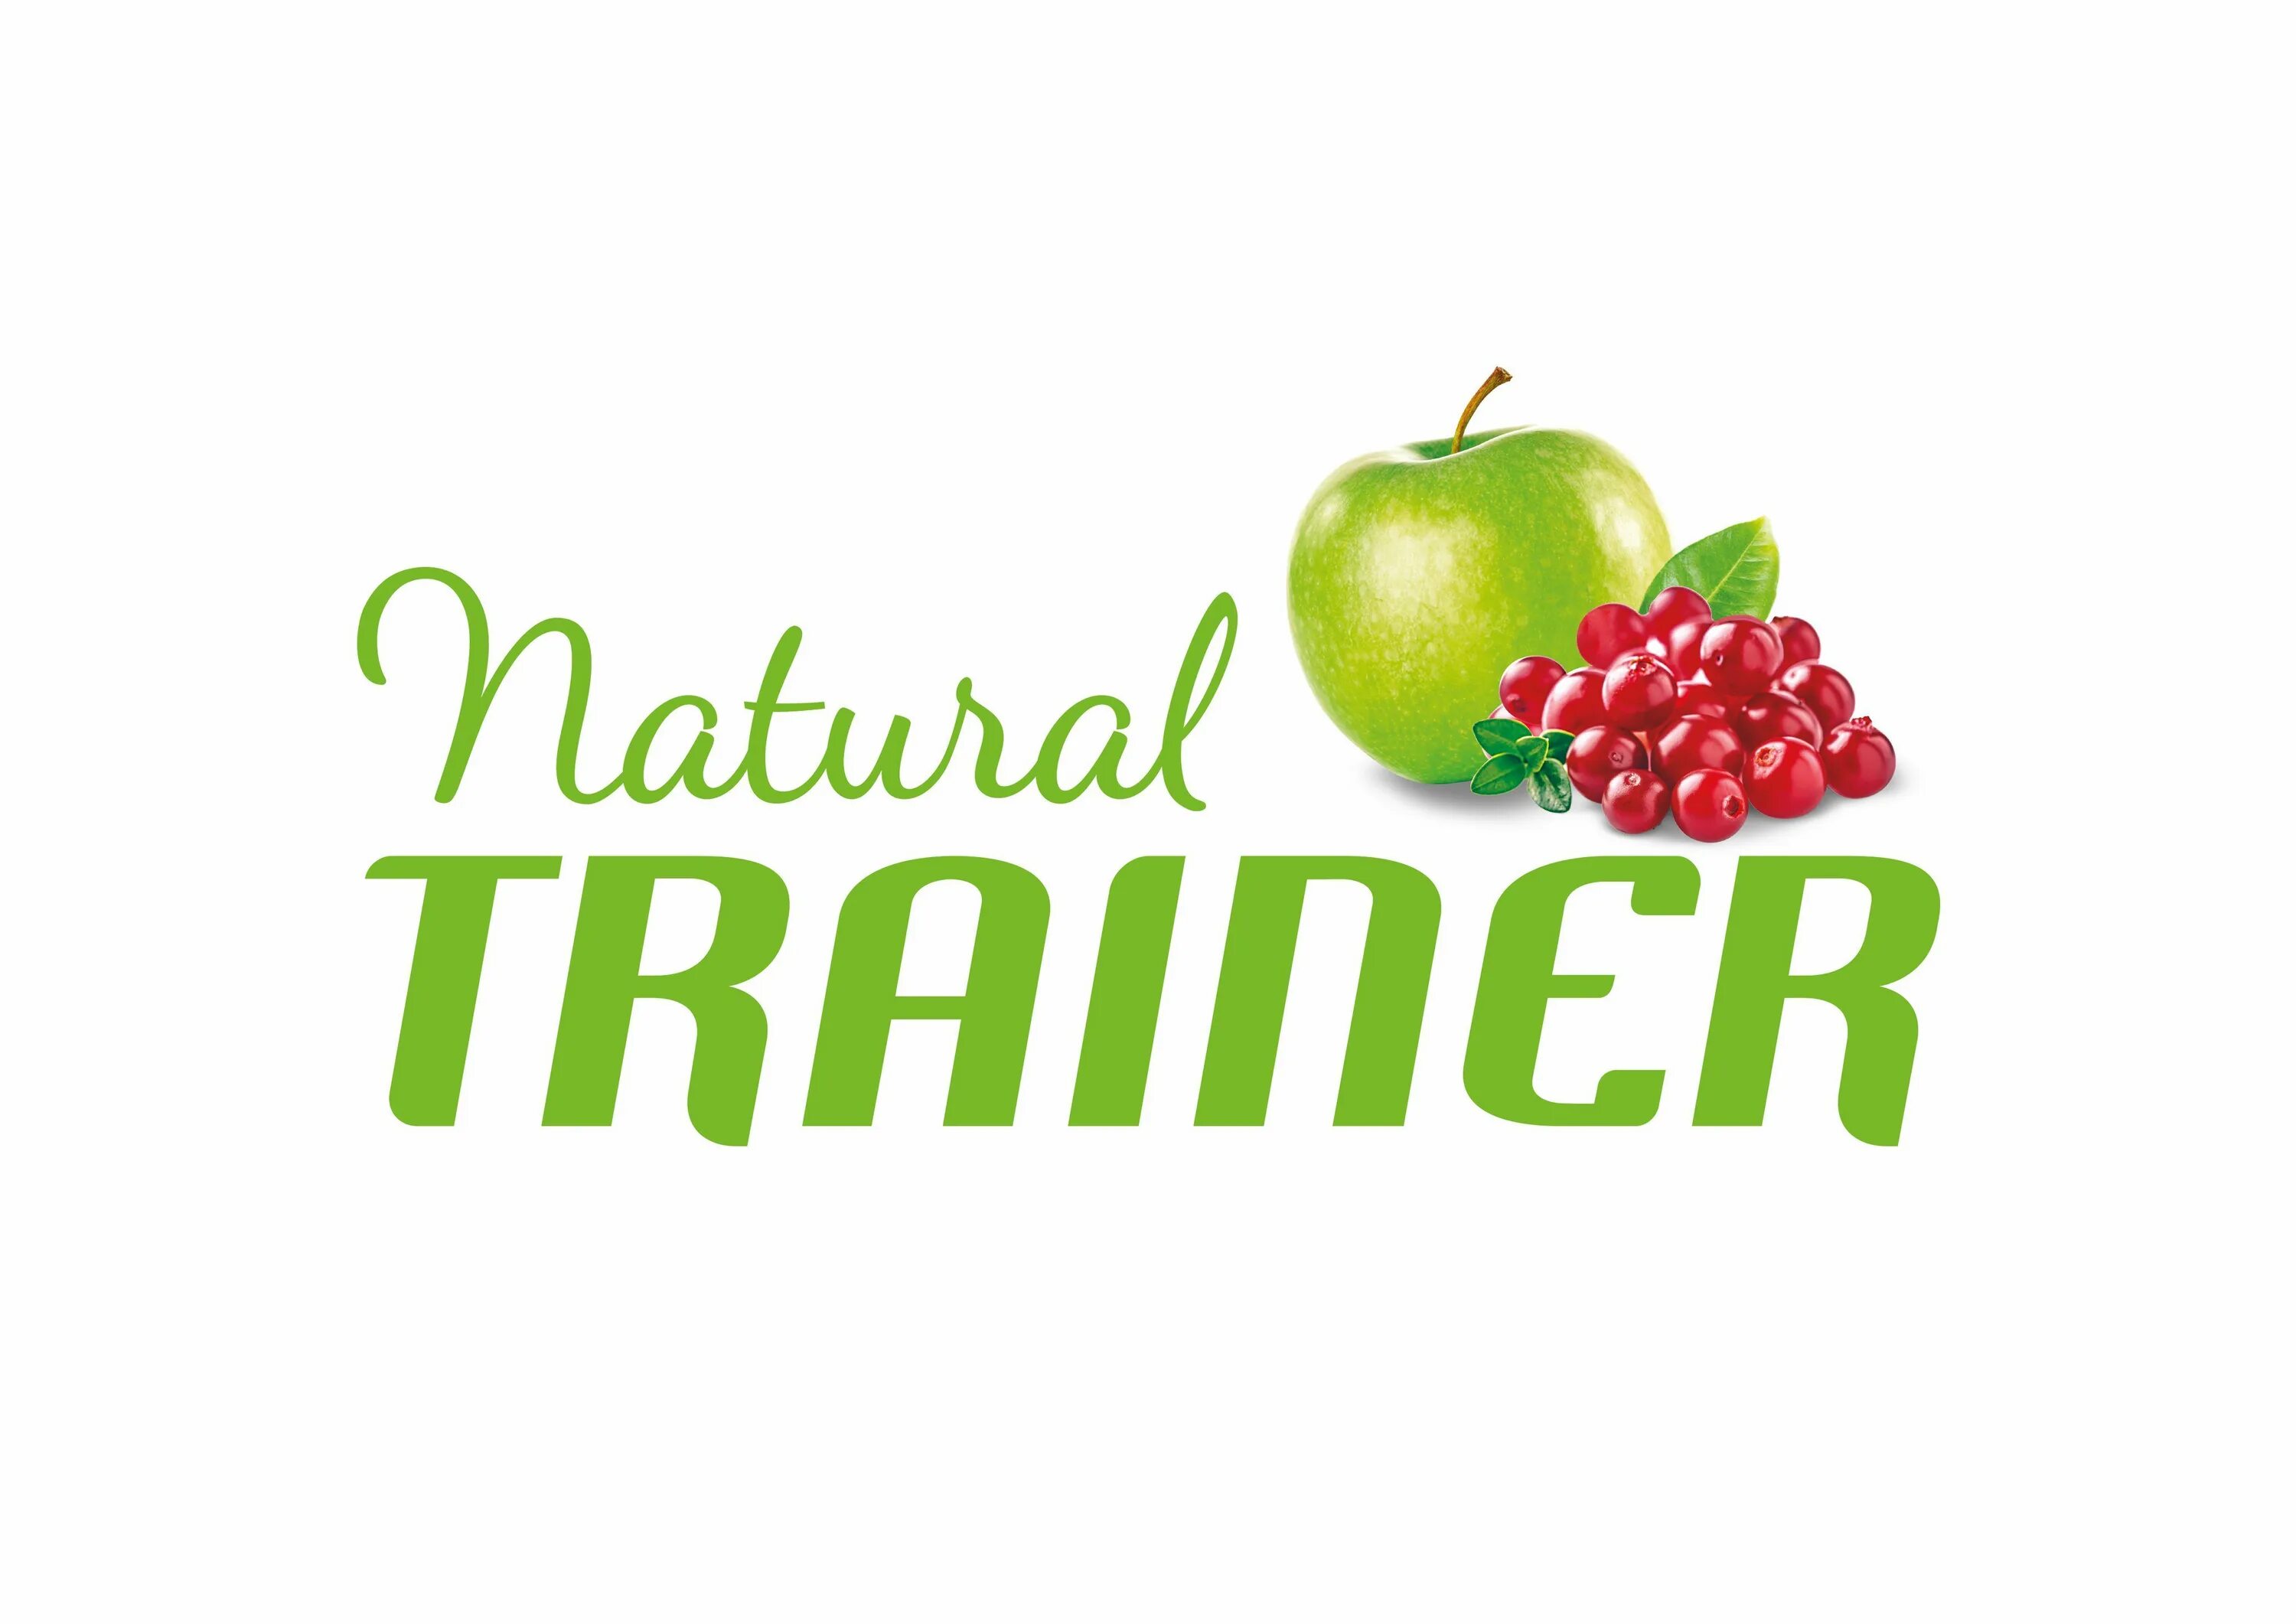 Natural trainer. Натурал трейнер. Логотип трейнер. Трейнер корм логотип.